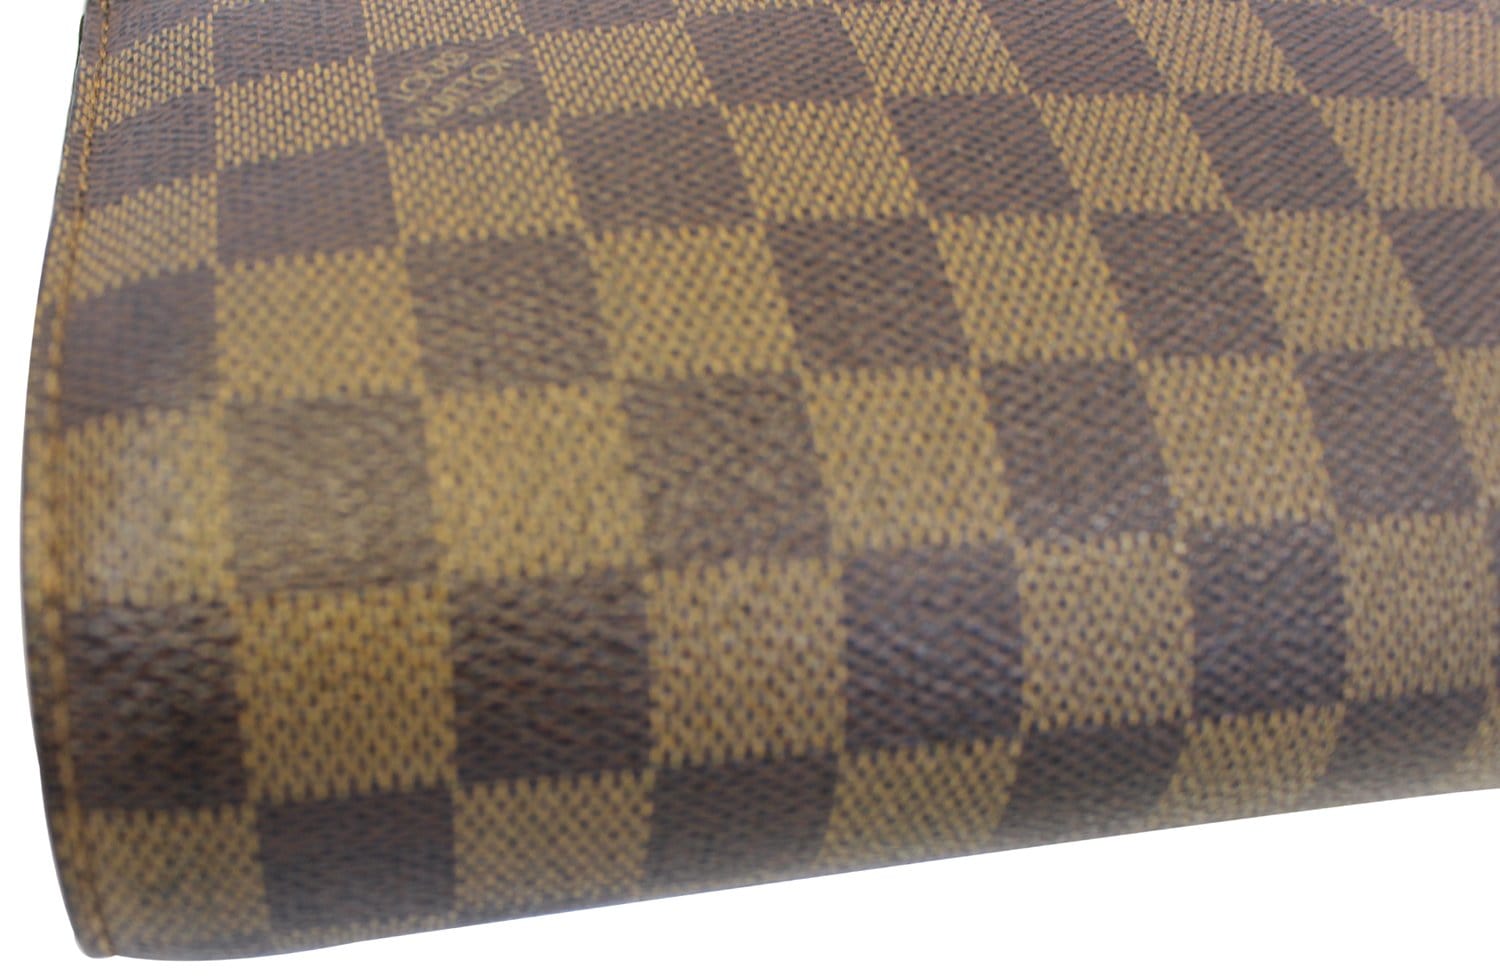 3yc1641]Auth Louis Vuitton clutch bag Damier Saint Louis N51993